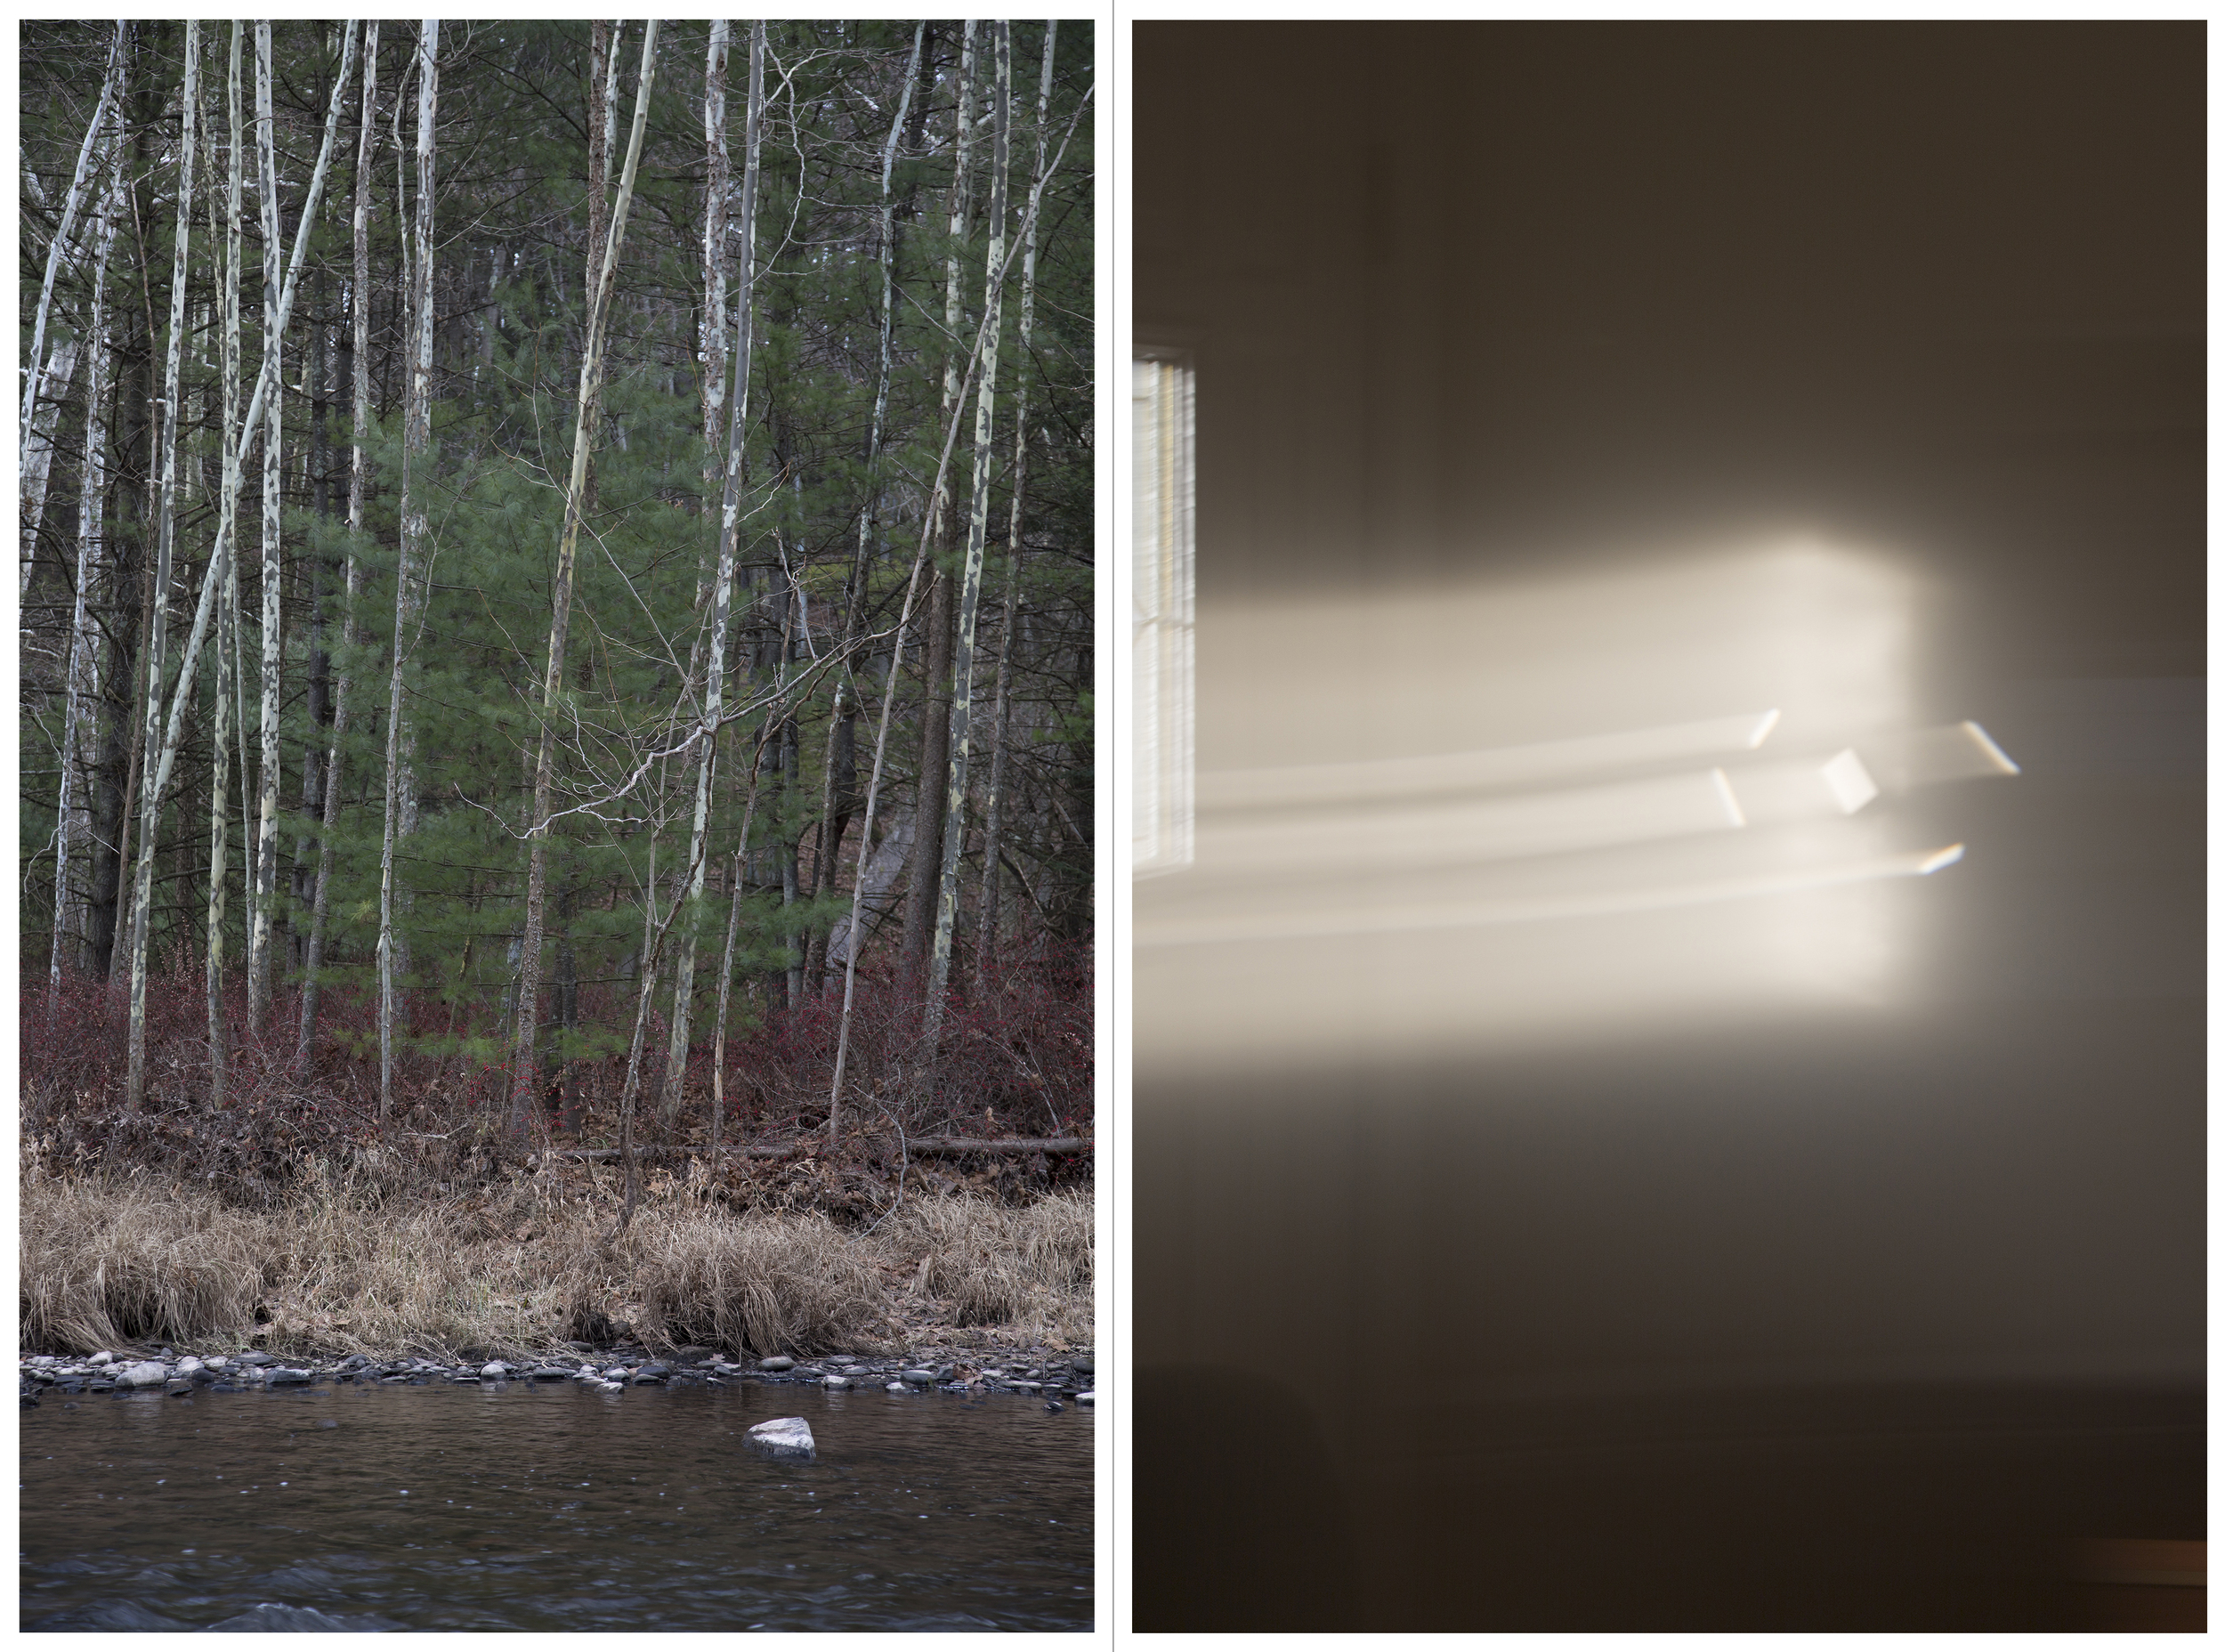 to return: Little Pine 1, Inkjet Photograph, 48" X 36," 2015.